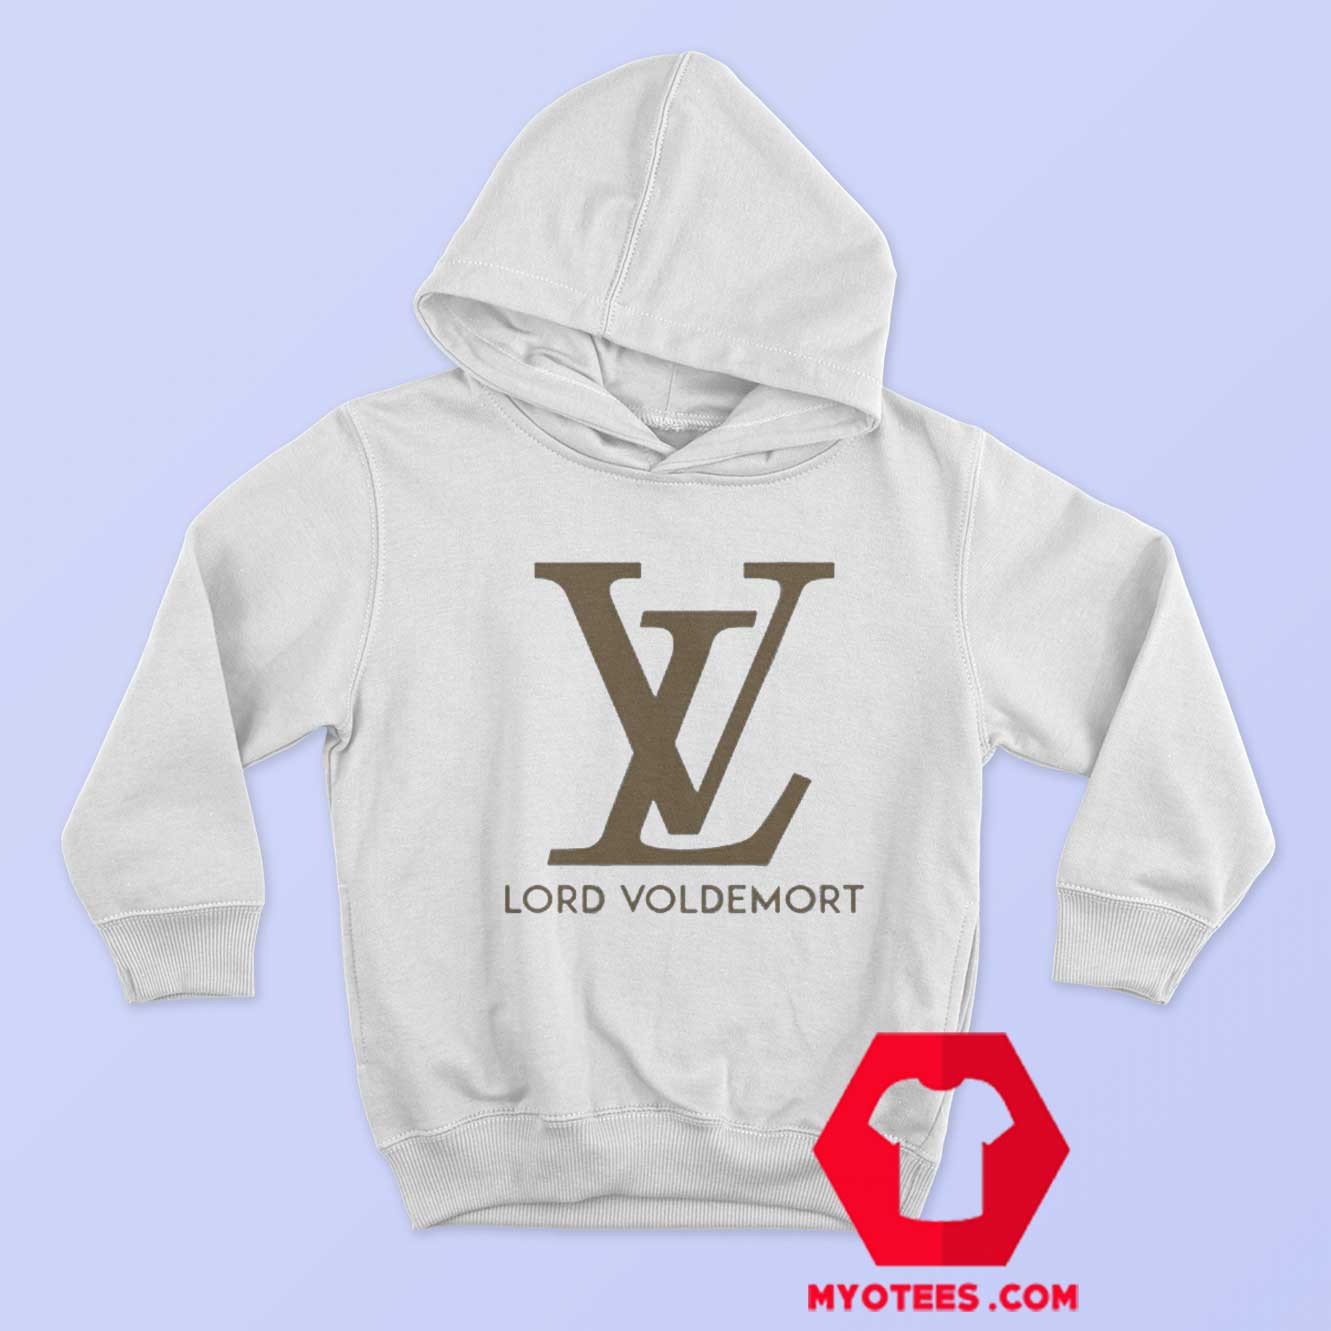 Lord Voldemort Louis Vuitton Parody Sweatshirt